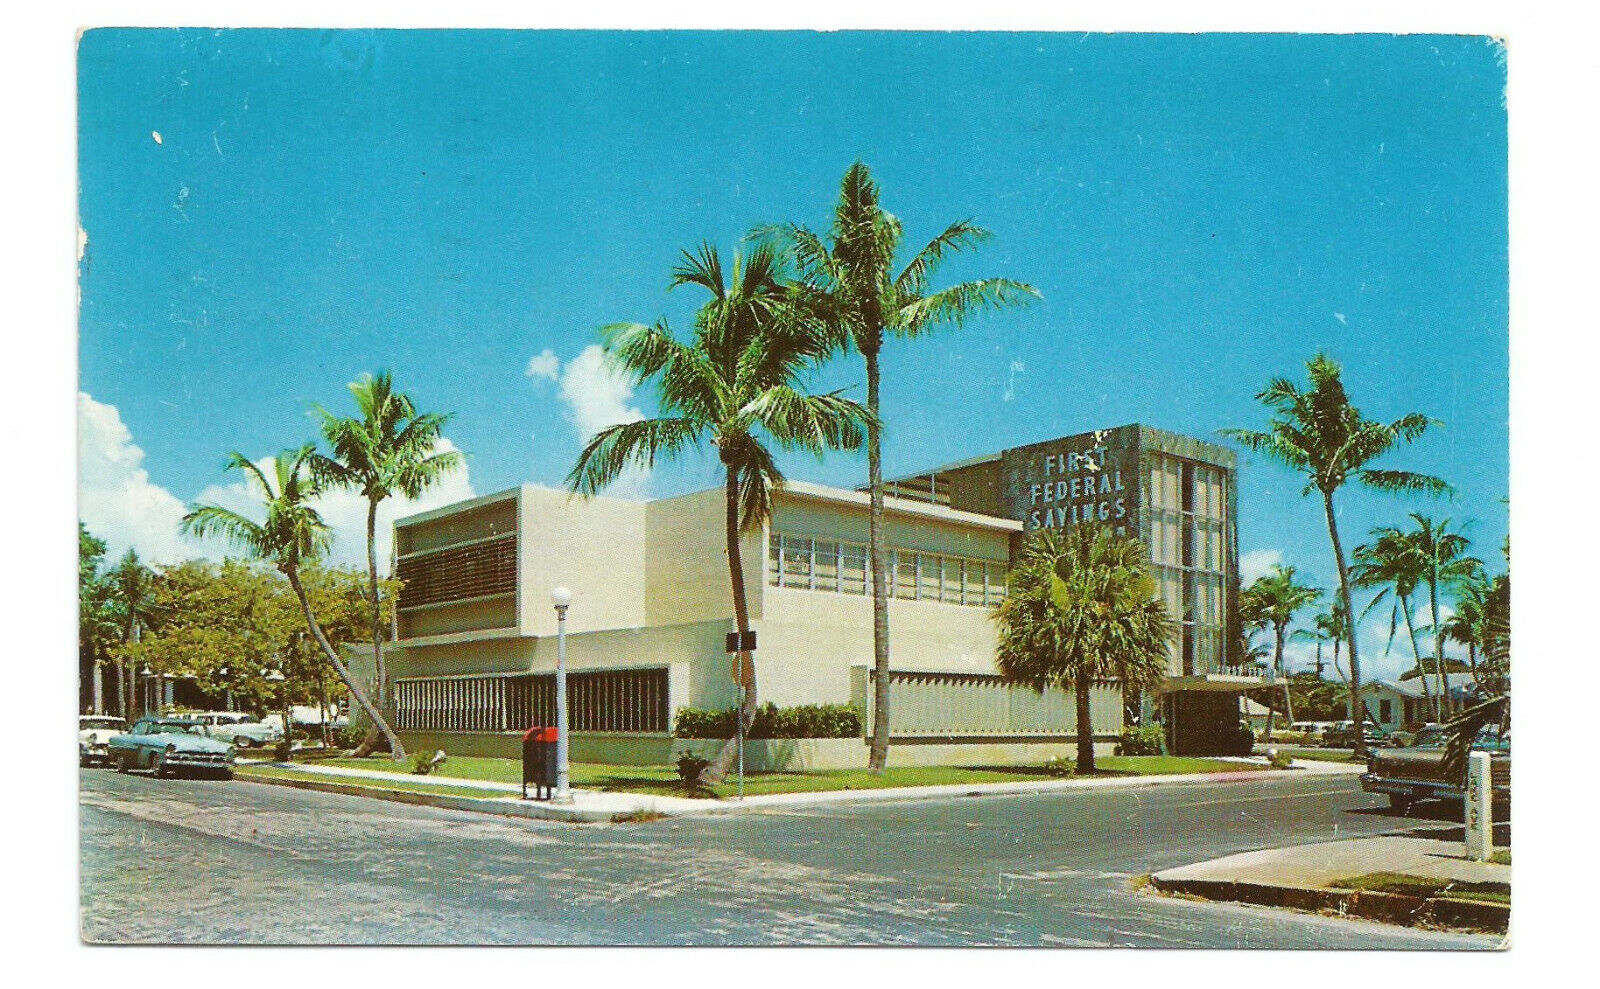 Lake Worth FL Postcard Florida First Federal Savings Lake Ave Palmway c1950s